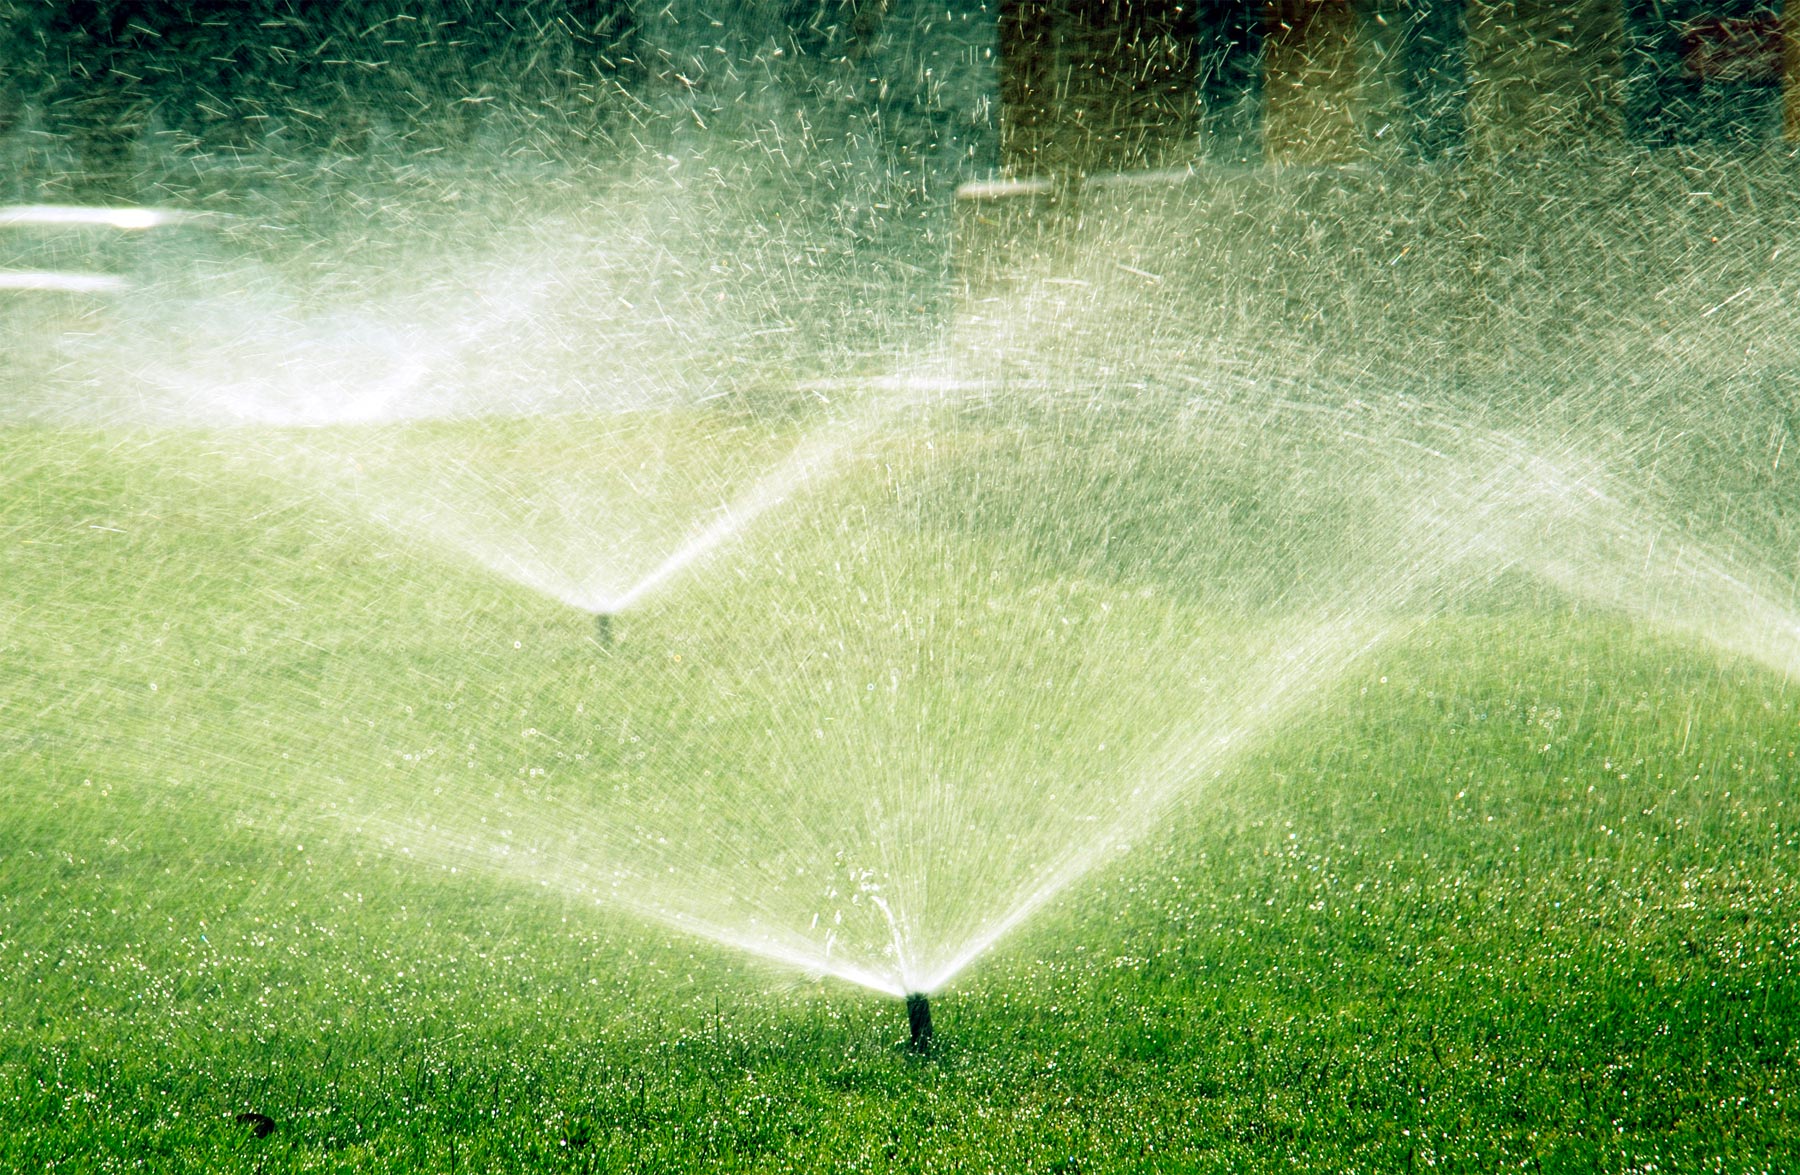 Irrigation Sprinklers